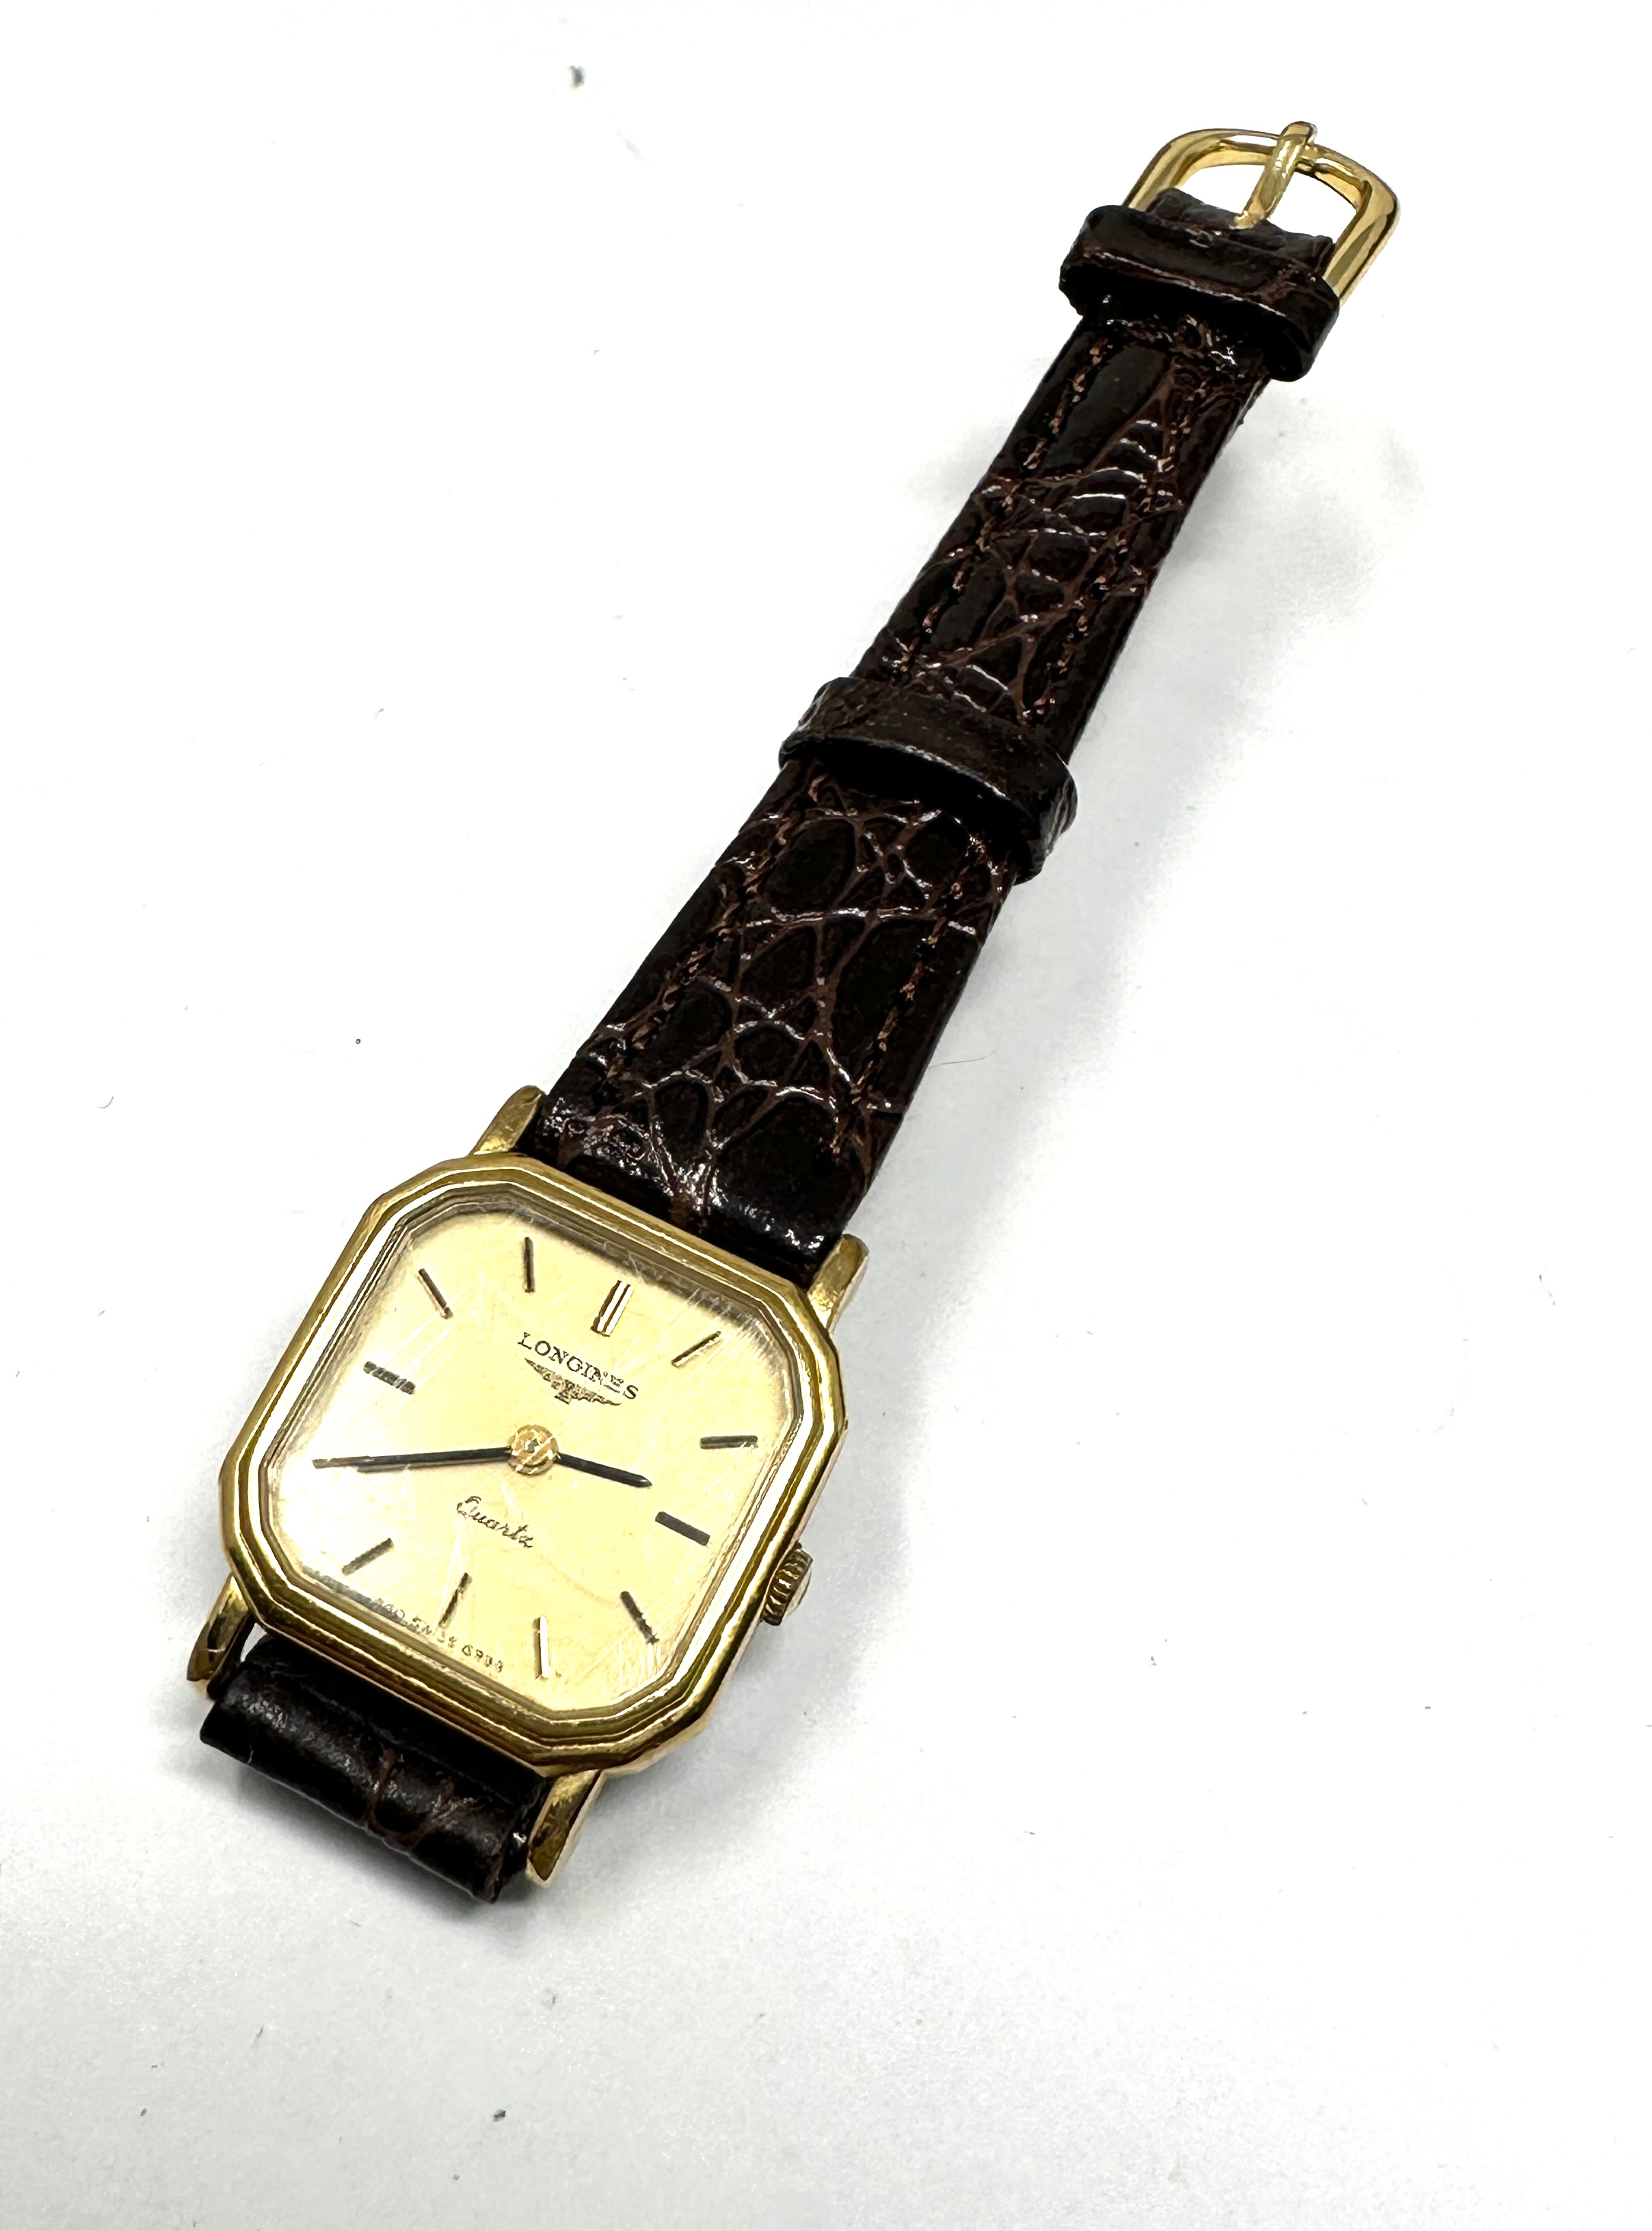 Ladies Longines quartz wristwatch the watch is not ticking